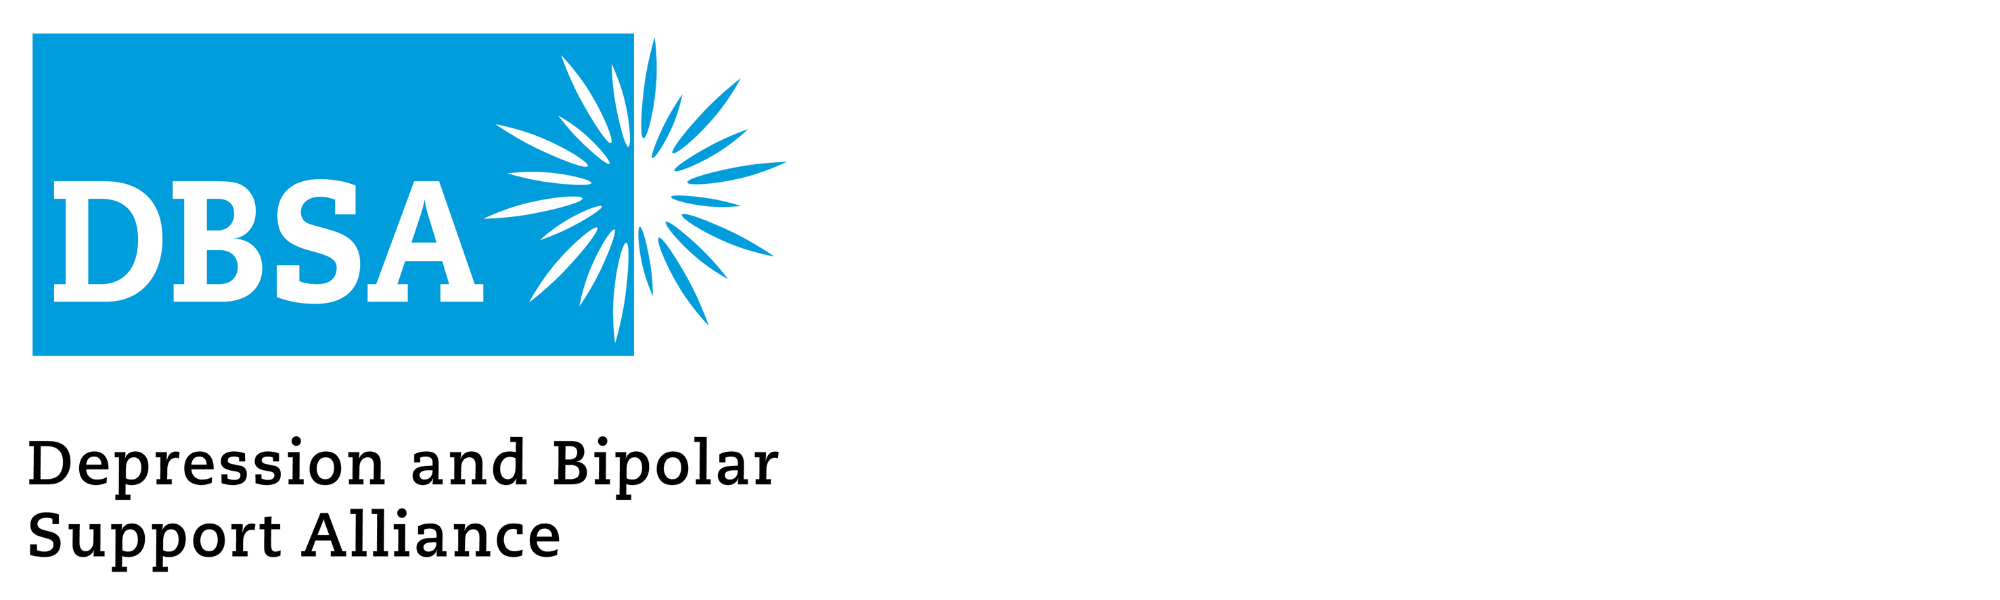 Depression and Bipolar Support Alliance (DBSA) Logo